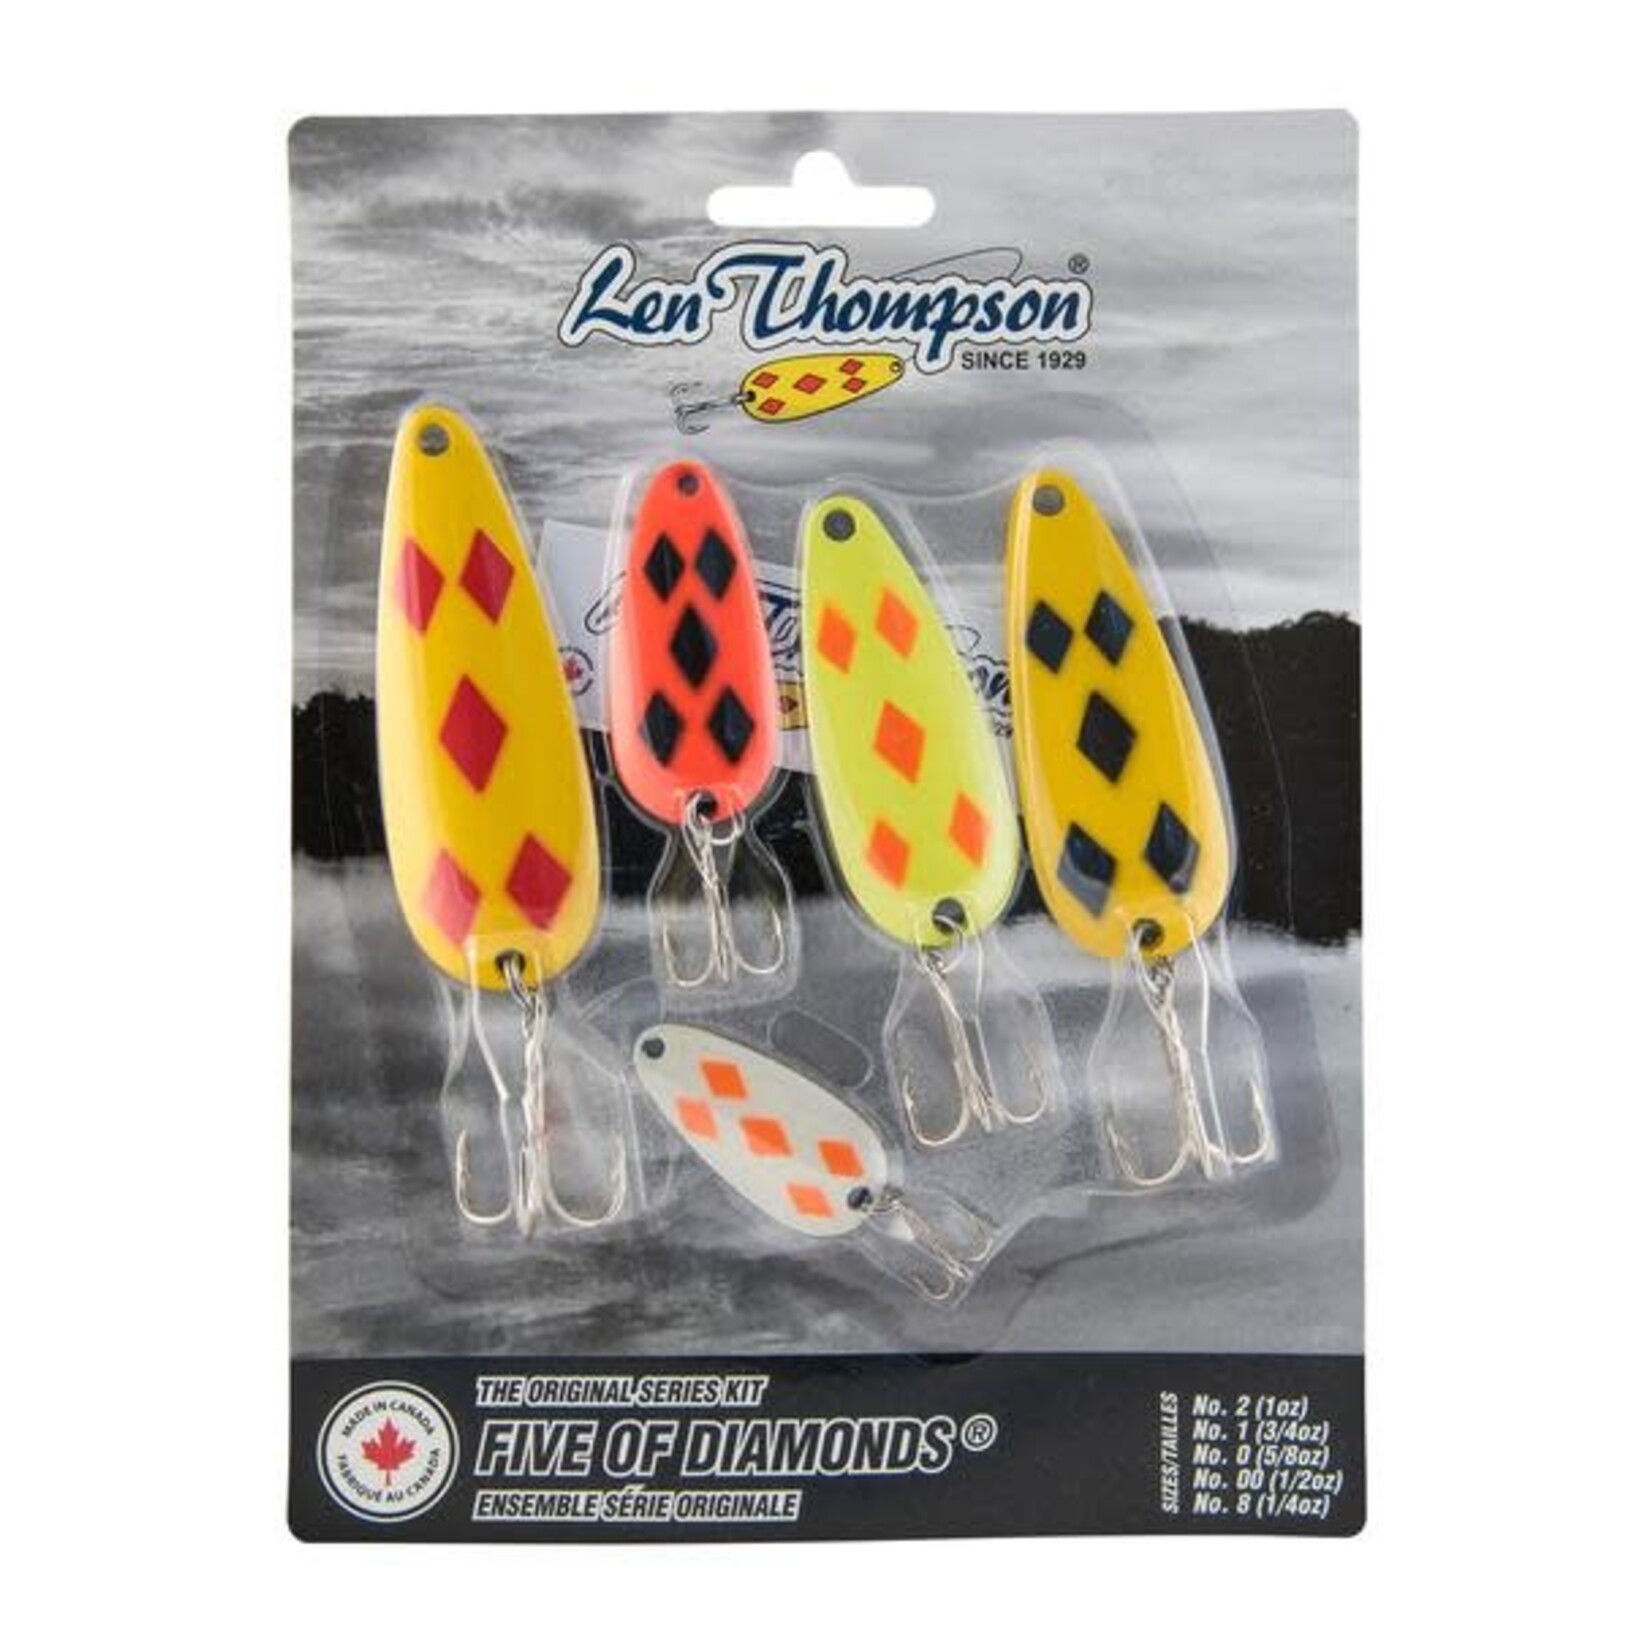 Len Thompson Len Thompson 5 Piece Five of Diamonds Kit